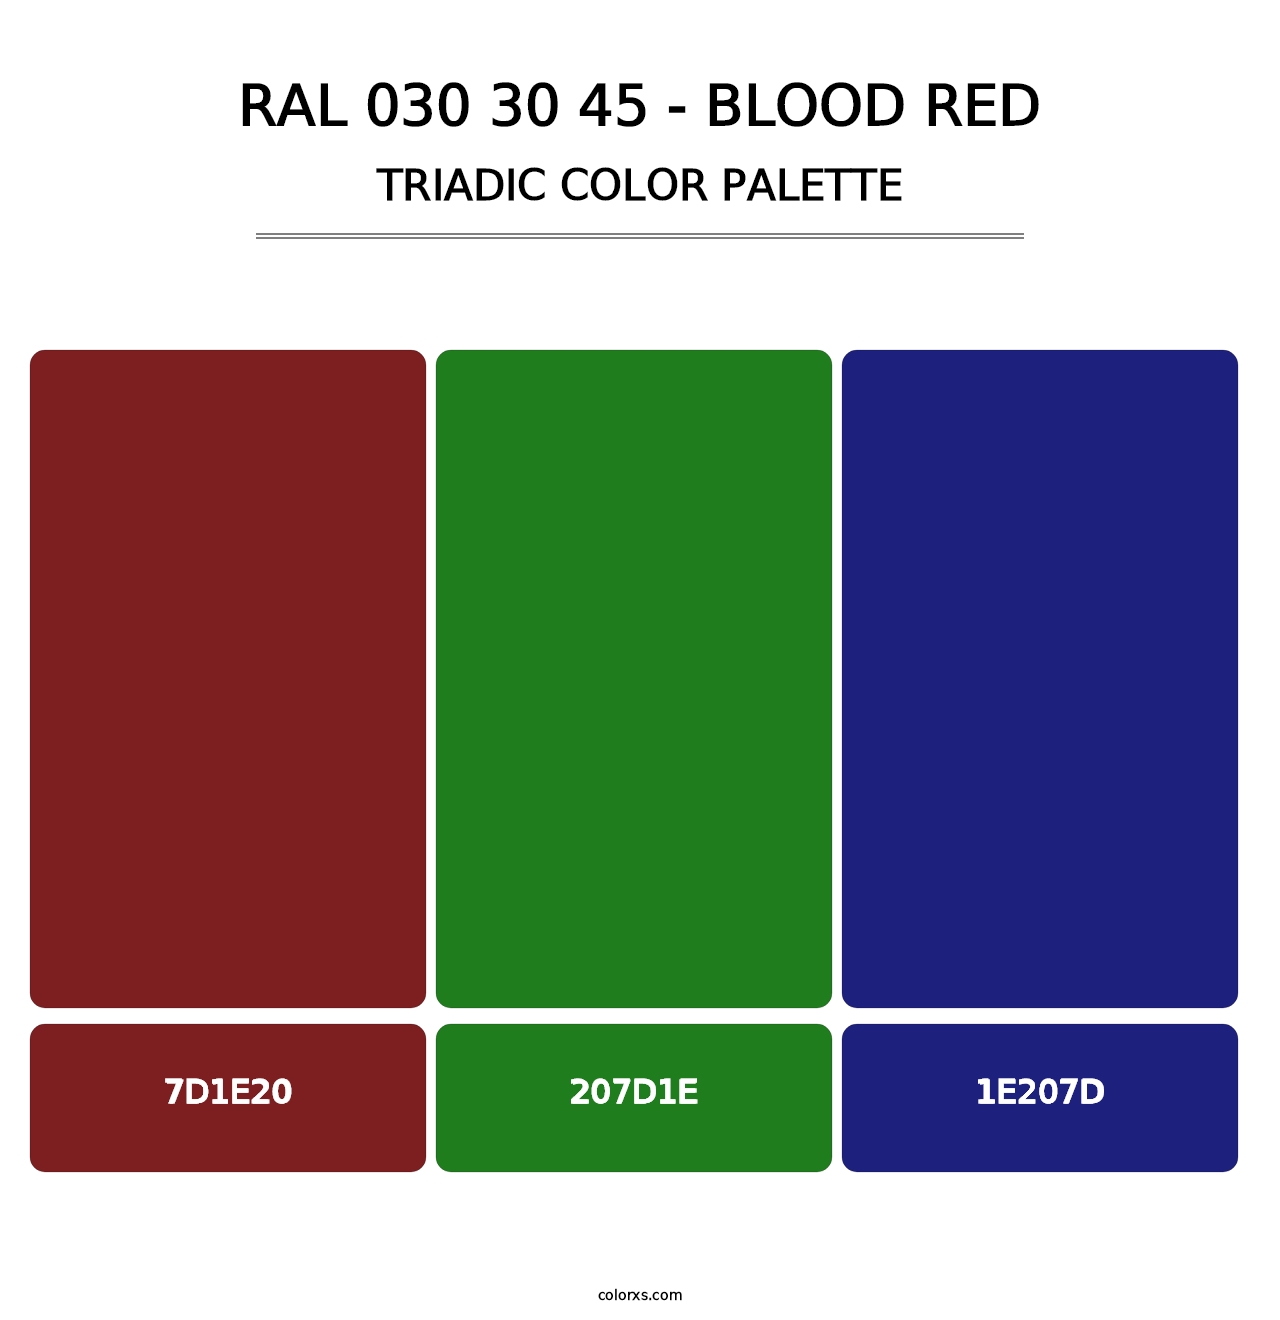 RAL 030 30 45 - Blood Red - Triadic Color Palette